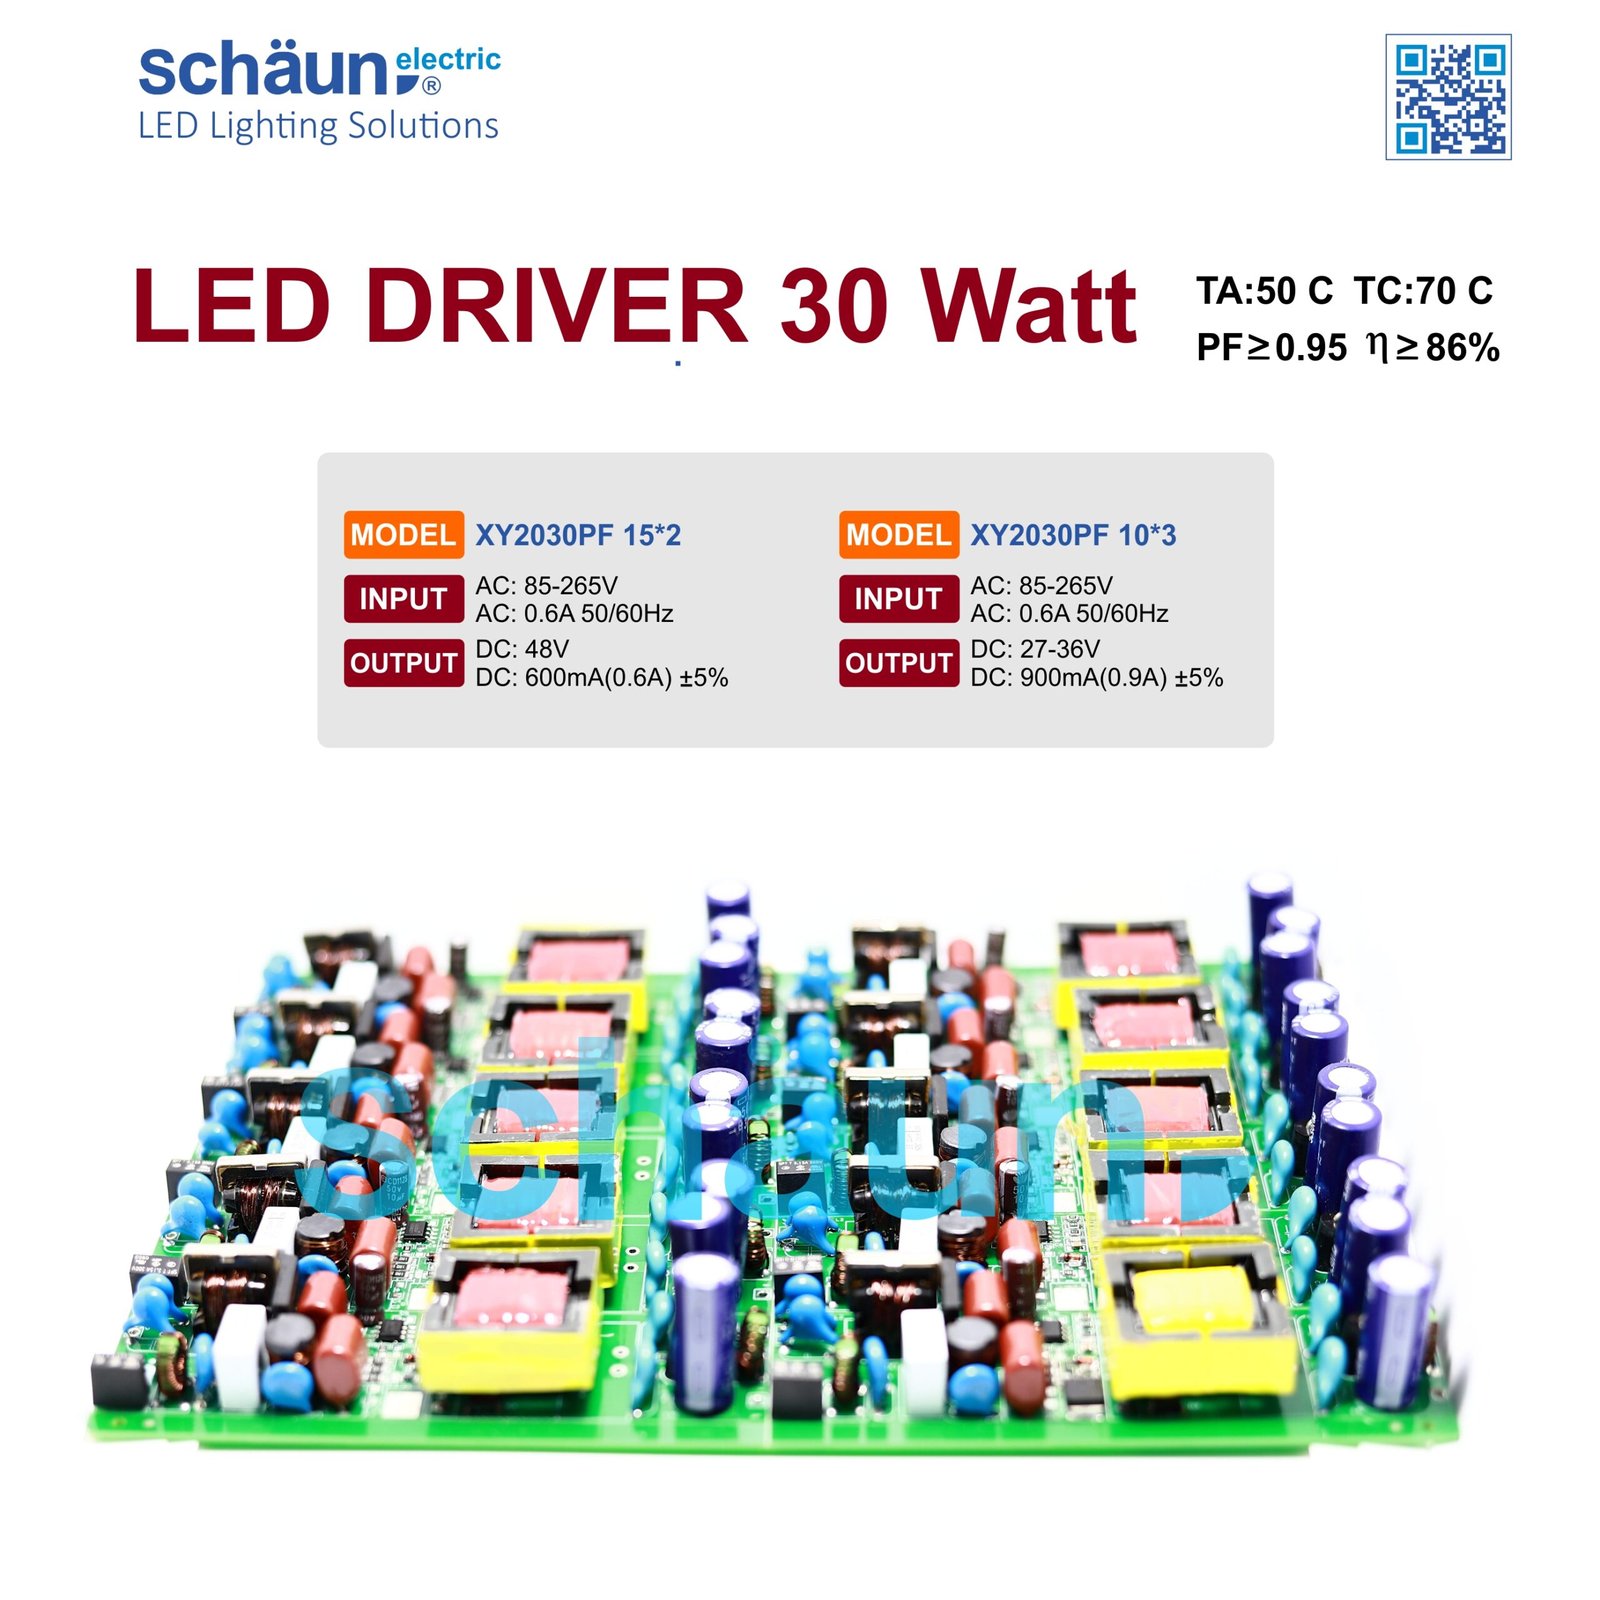 30 Watt LED Driver in Pakistan